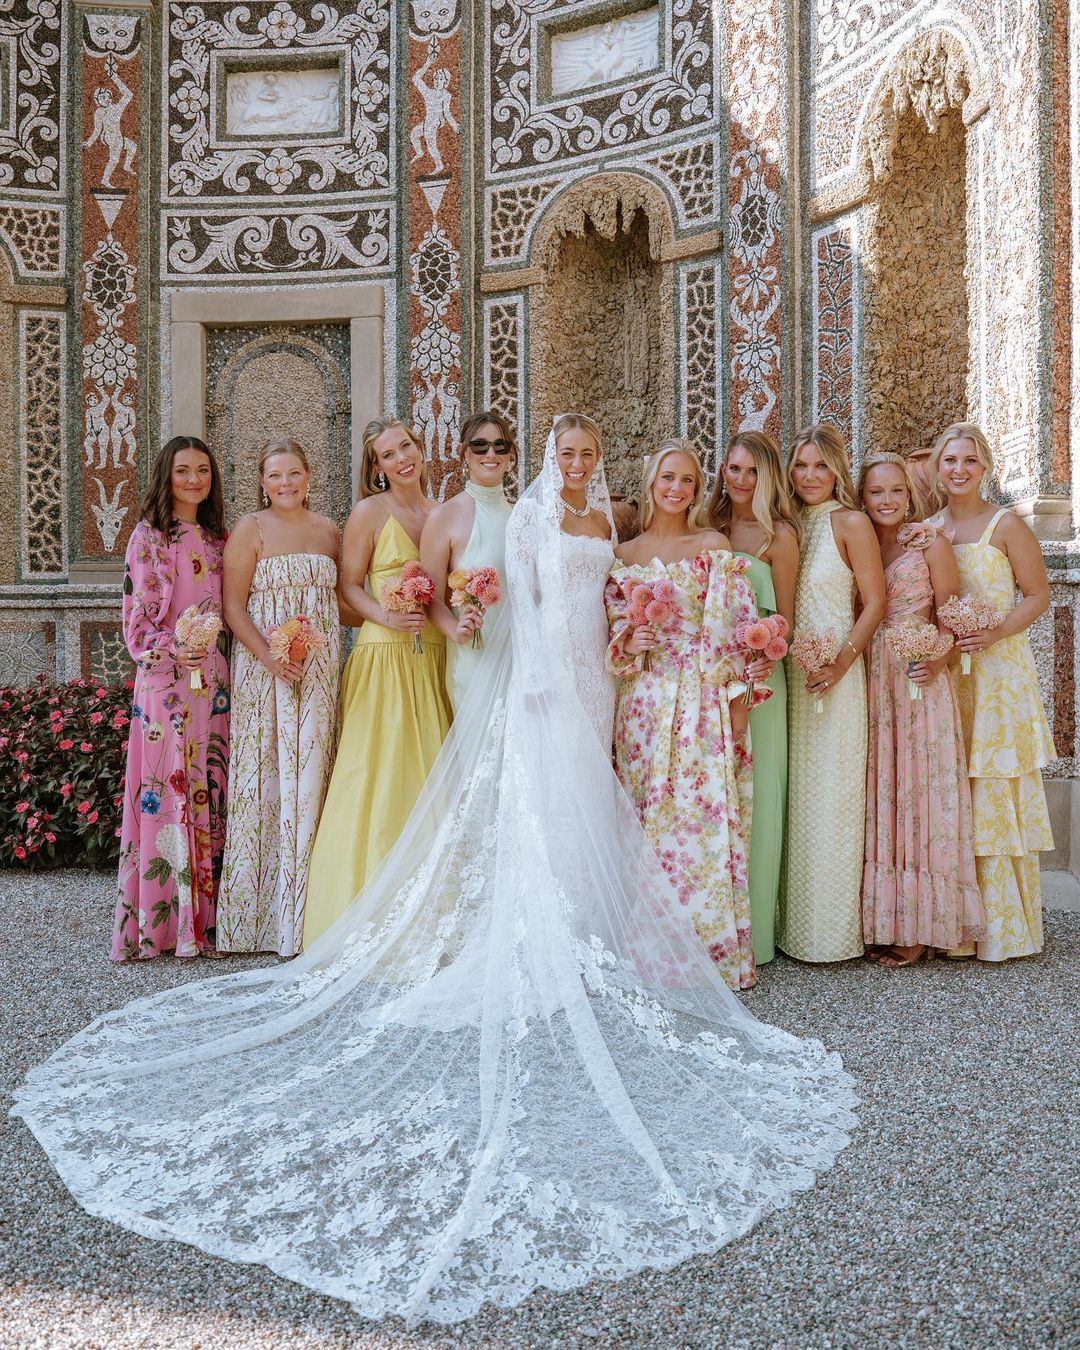 Mismatched bridesmaid dresses photo by Kristen Kilpatrick